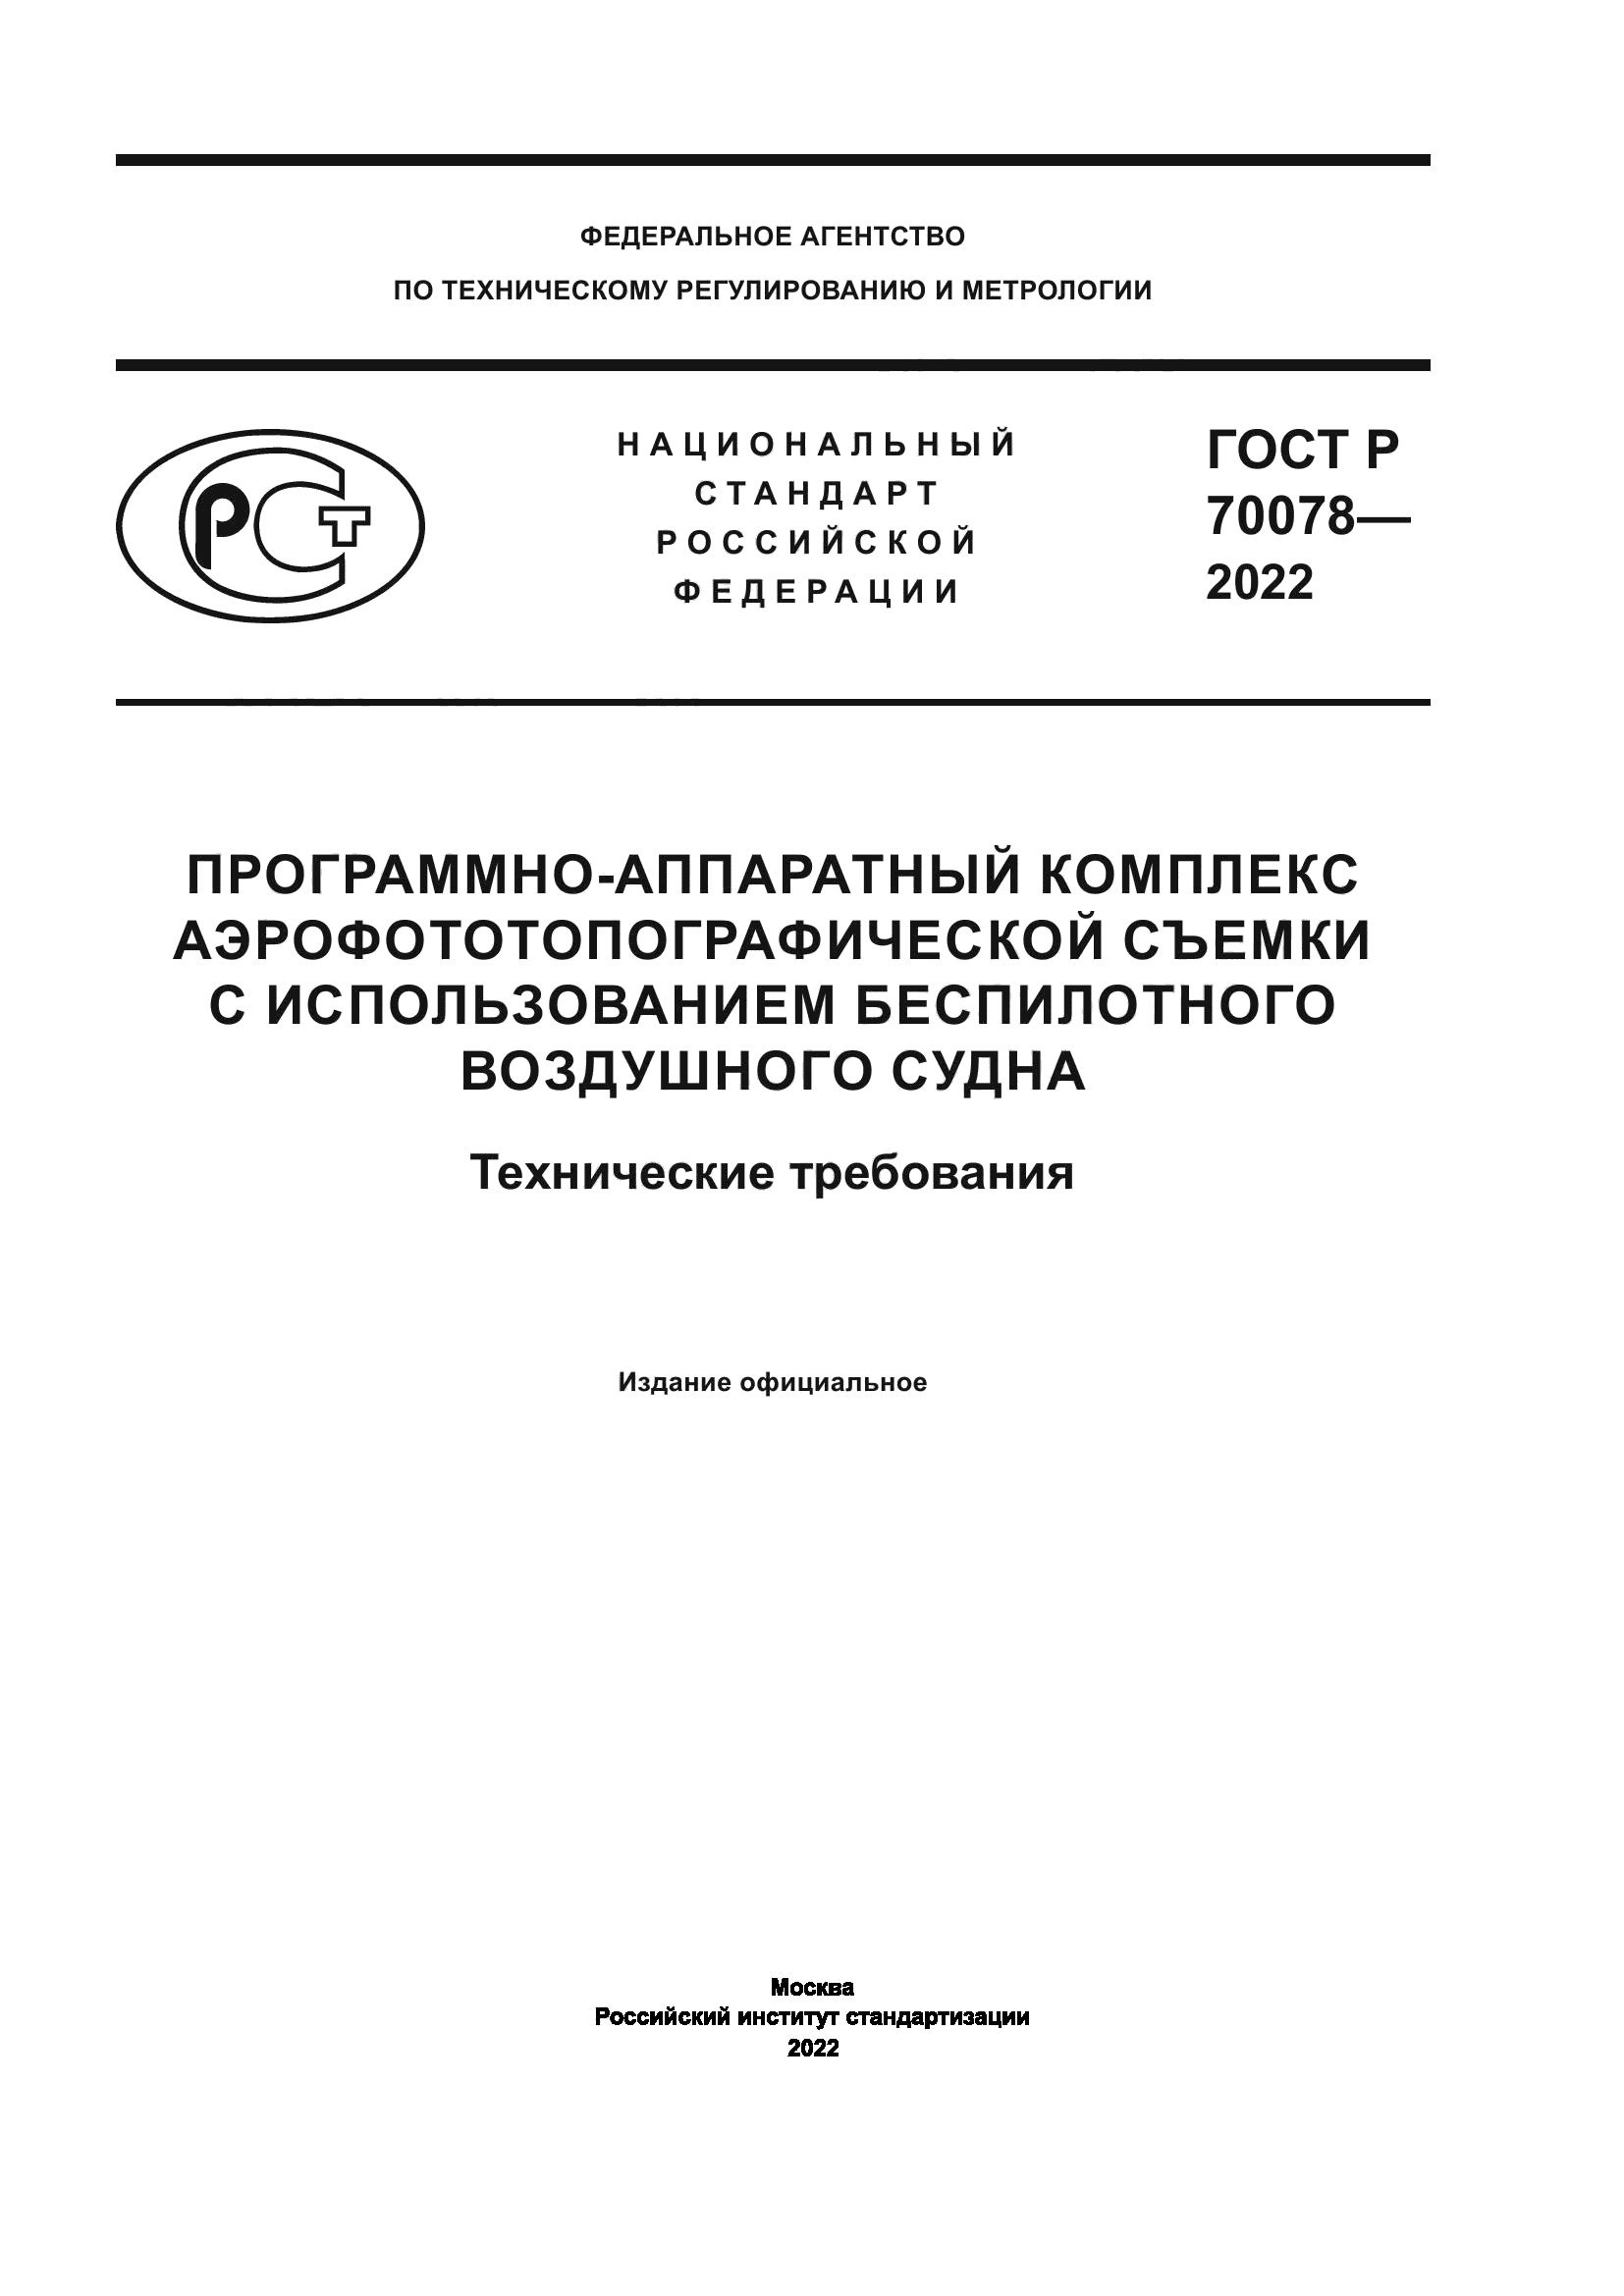 ГОСТ Р 70078-2022